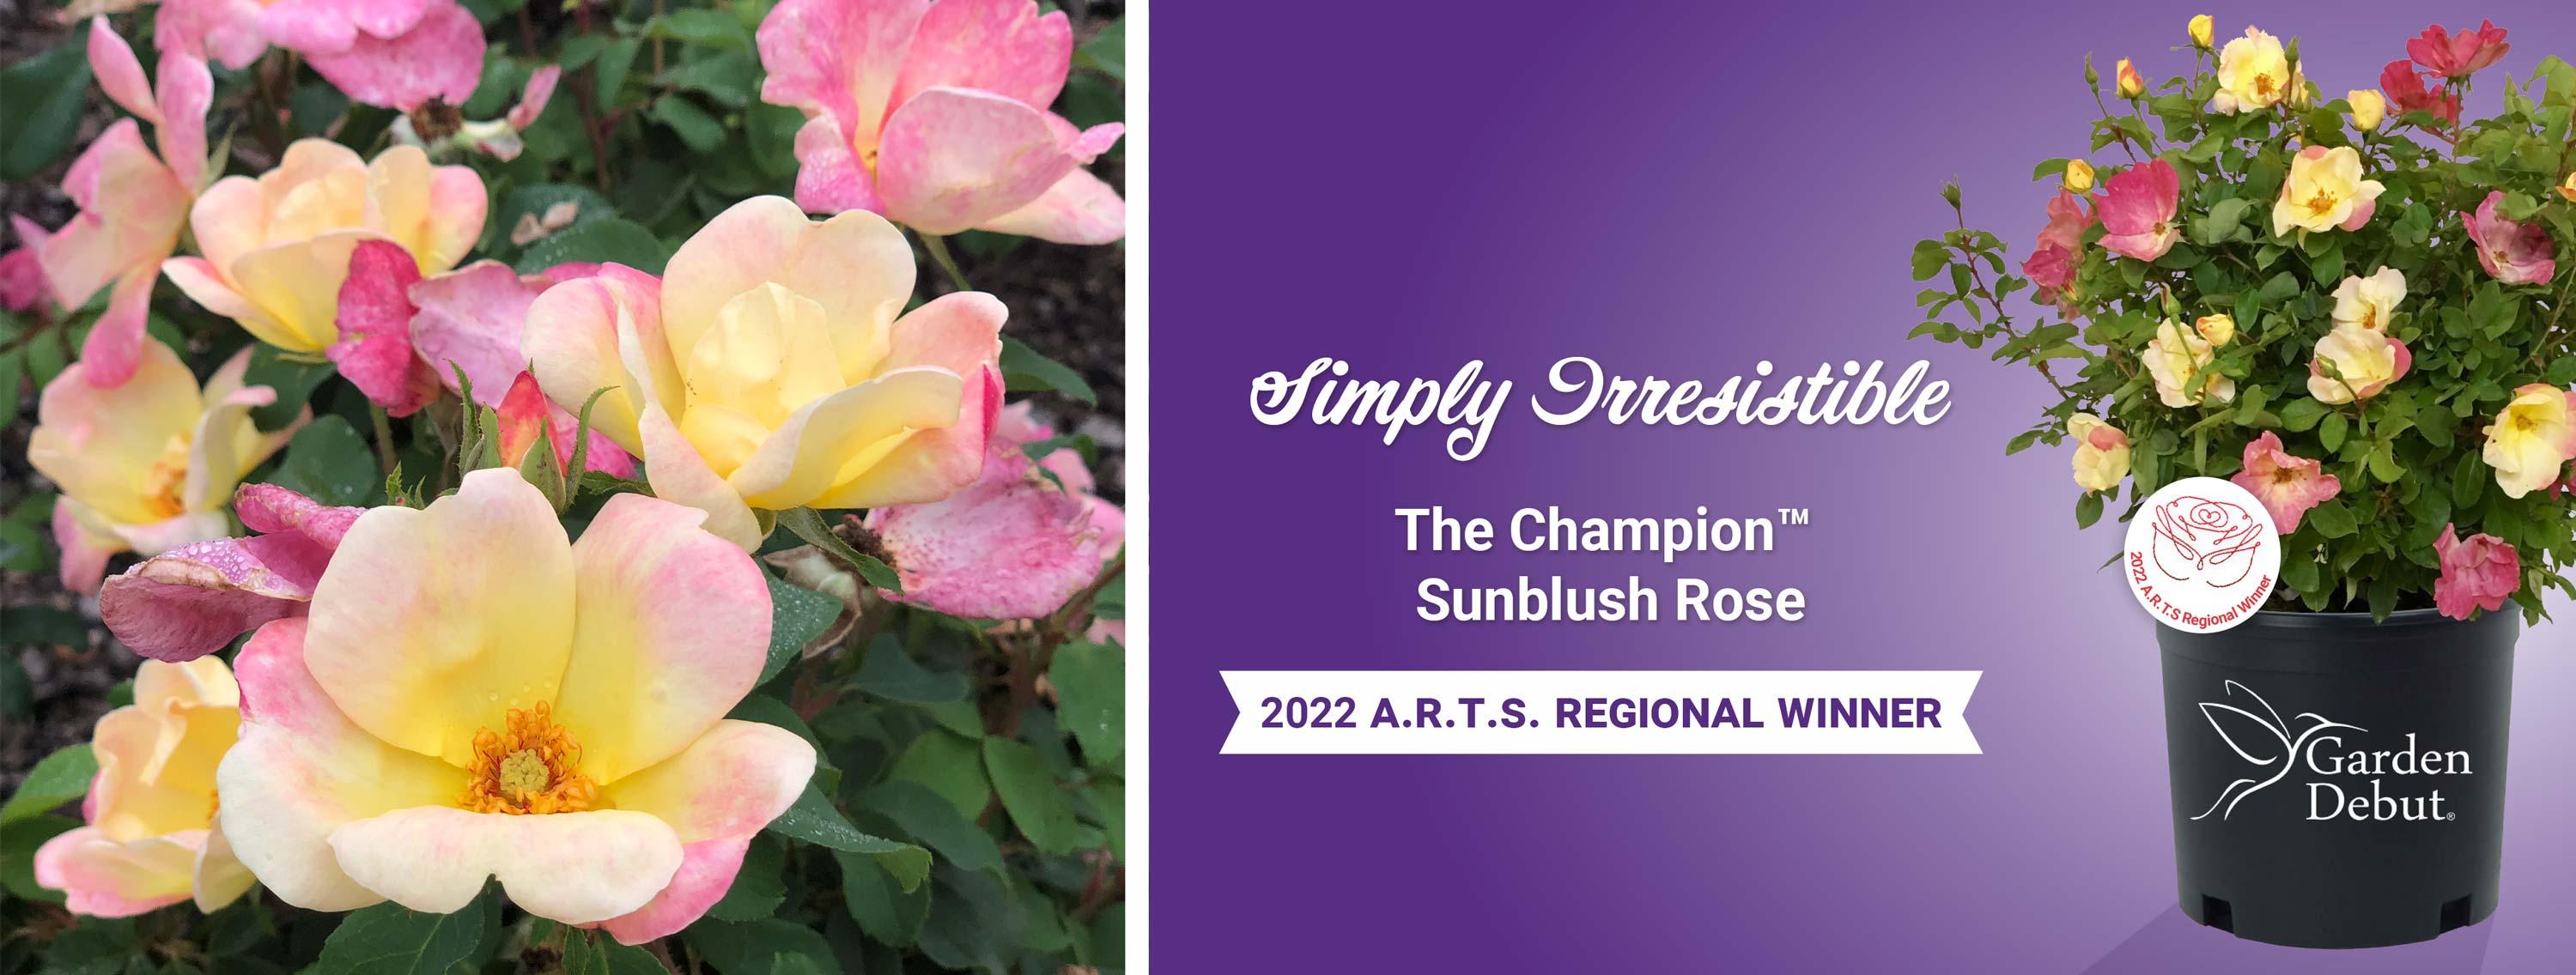 The Champion Sunblush Rose.